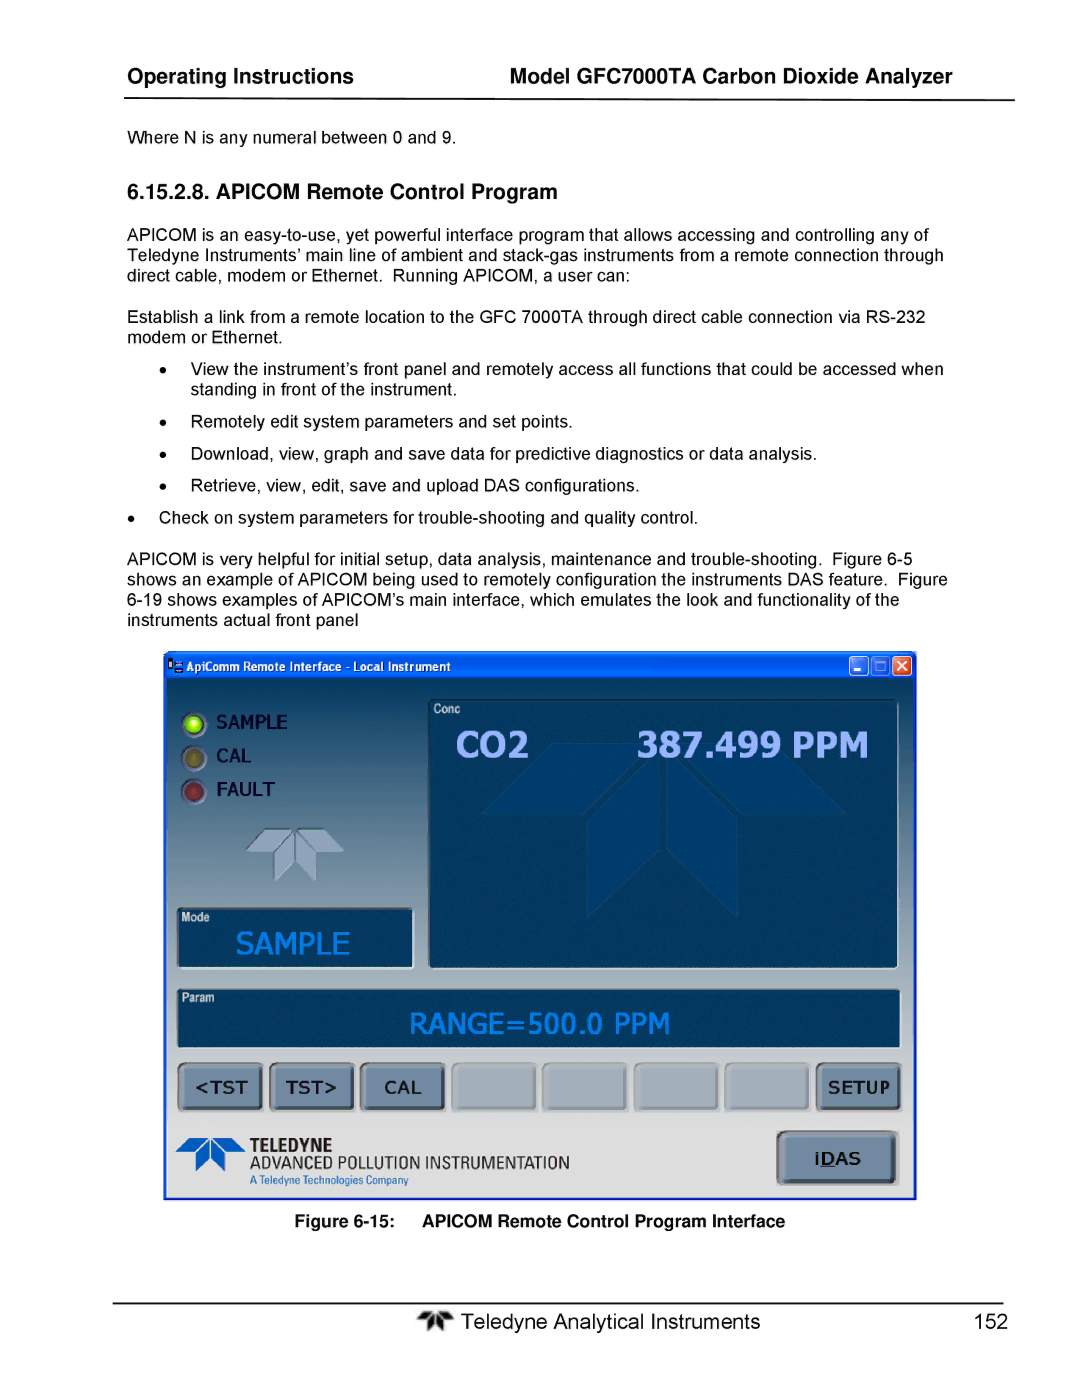 Teledyne gfc 7000ta operation manual Apicom Remote Control Program, Where N is any numeral between 0 